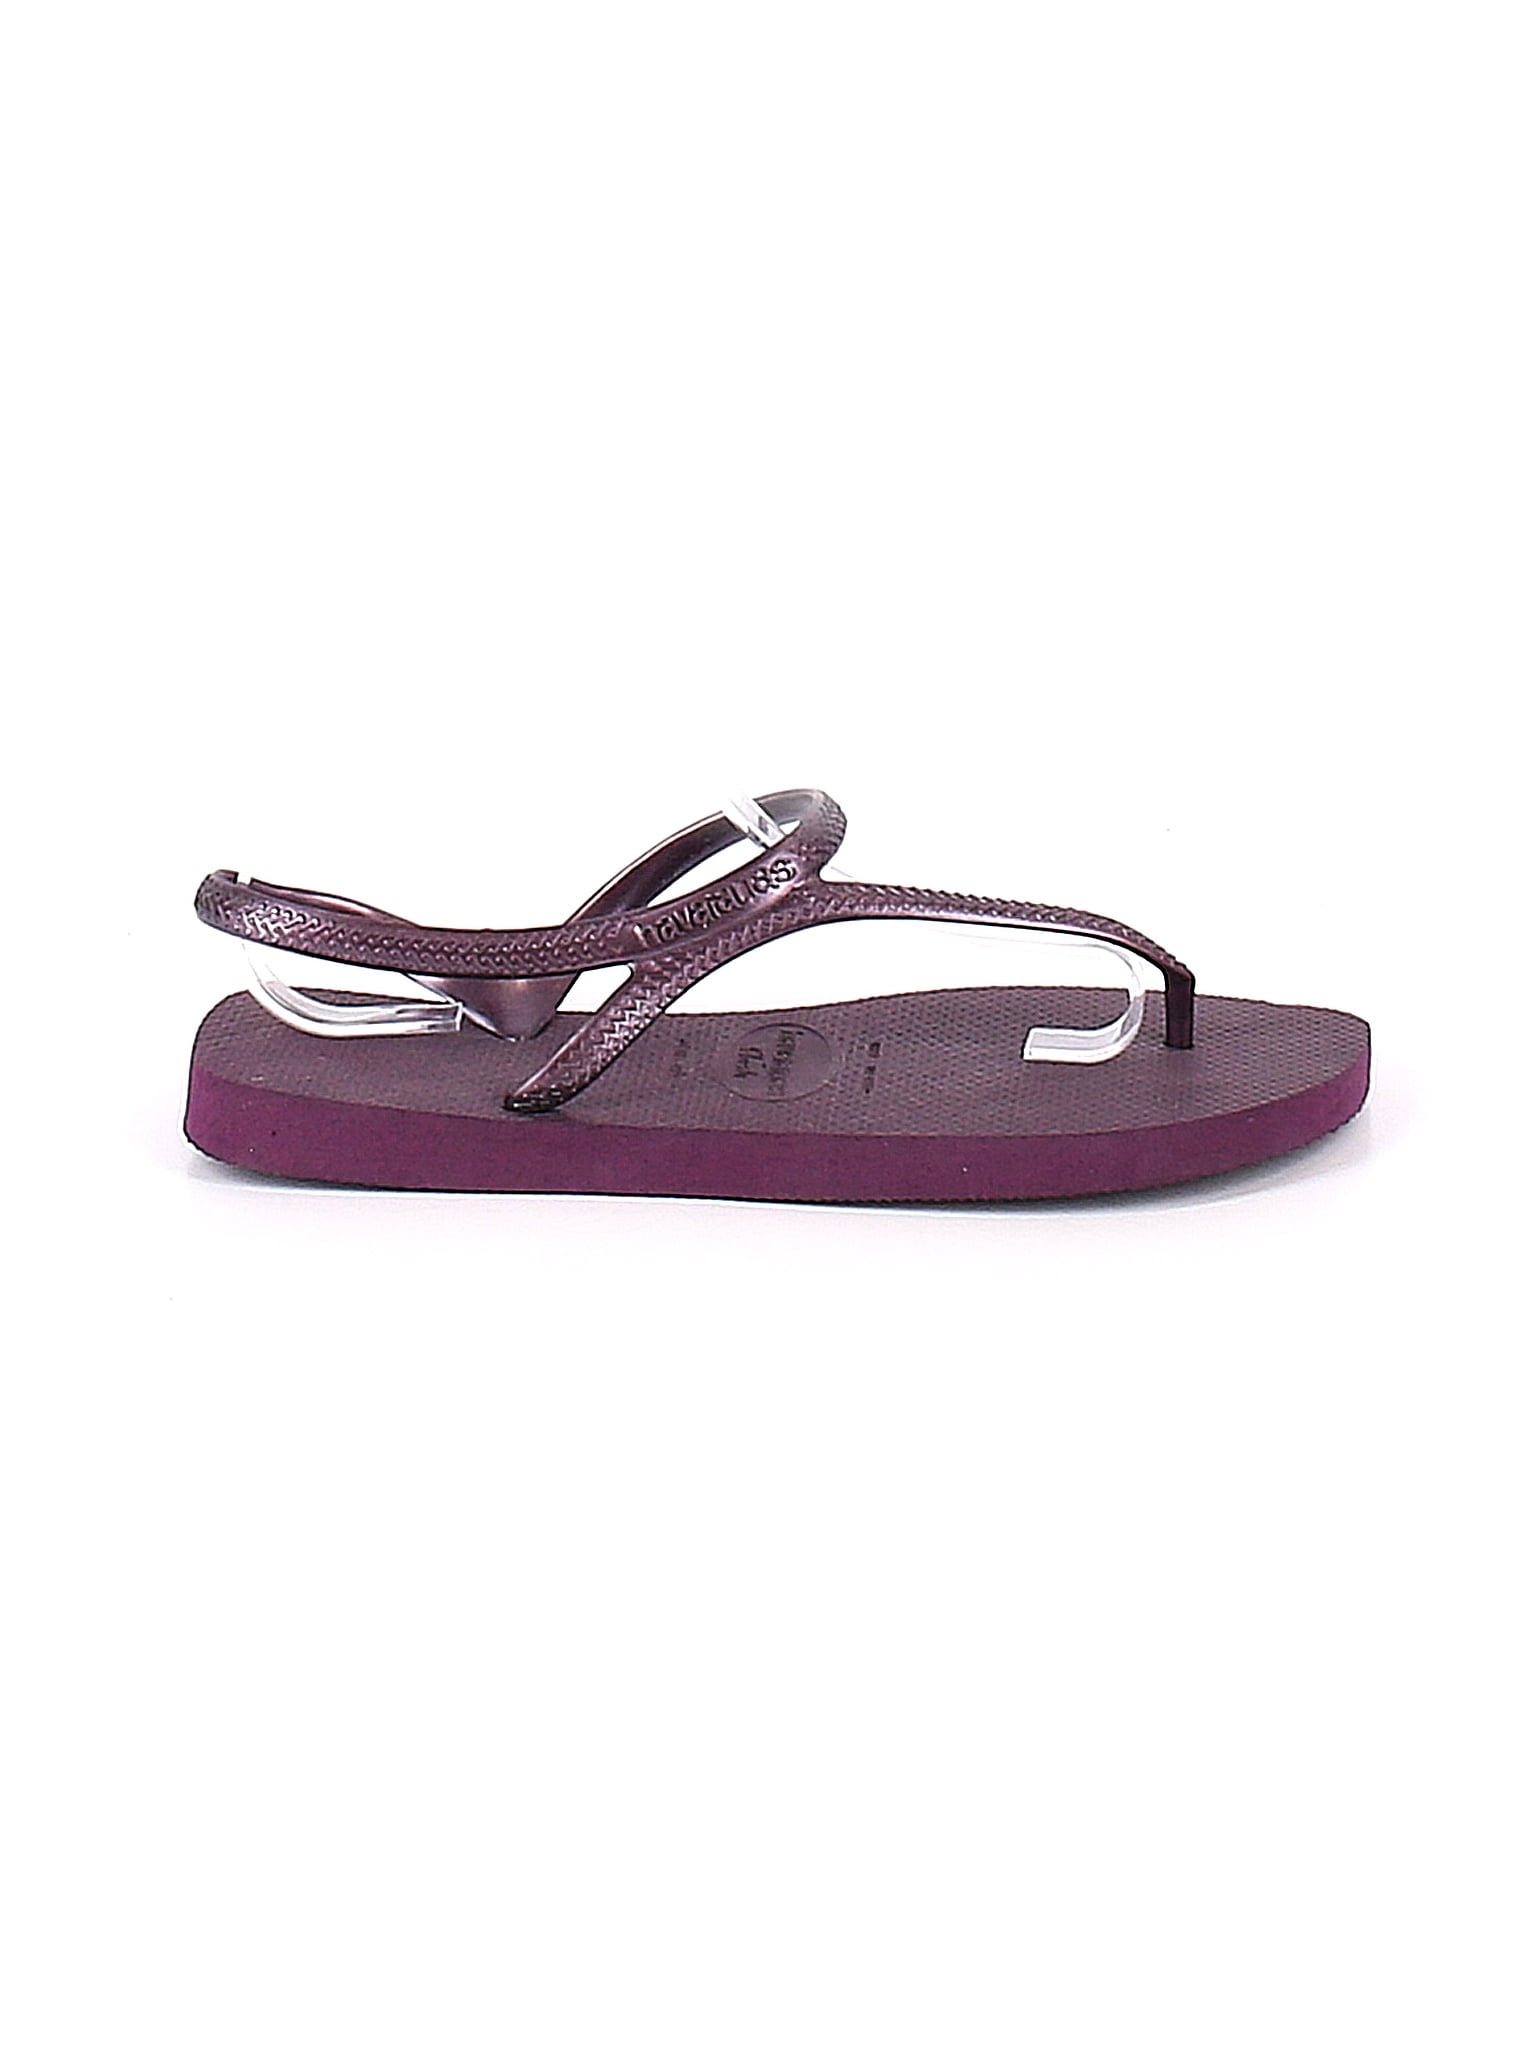 New Havaianas Flat Flip Flops Womens Sandals Shoes  11/12Thin Strap Lilac Purple 